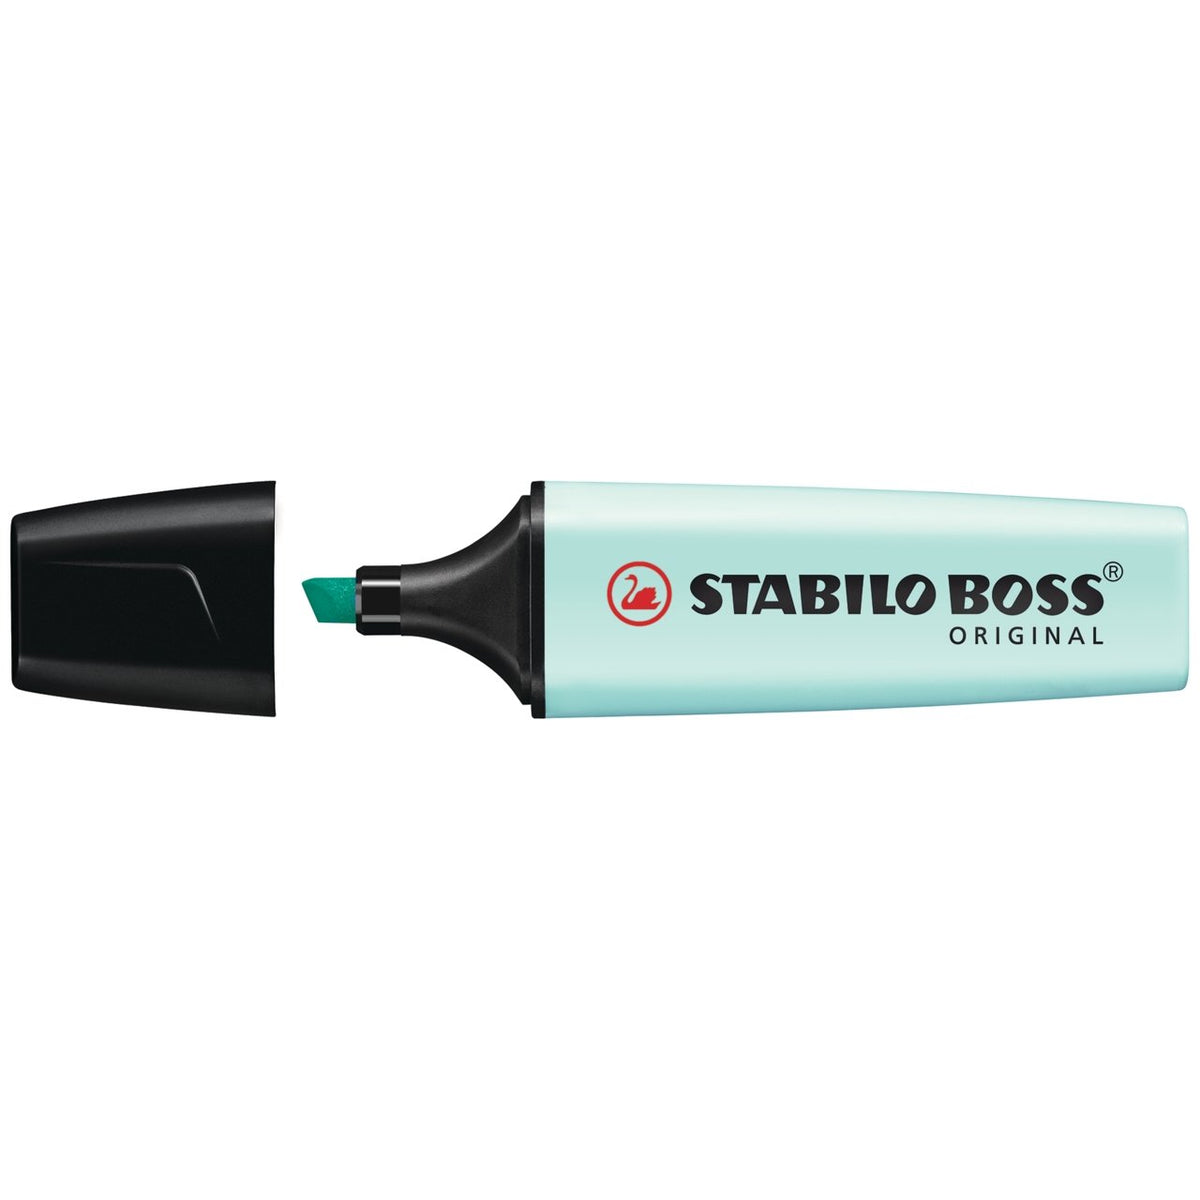 Stabilo Boss Original Highlighter - Turquoise Blue